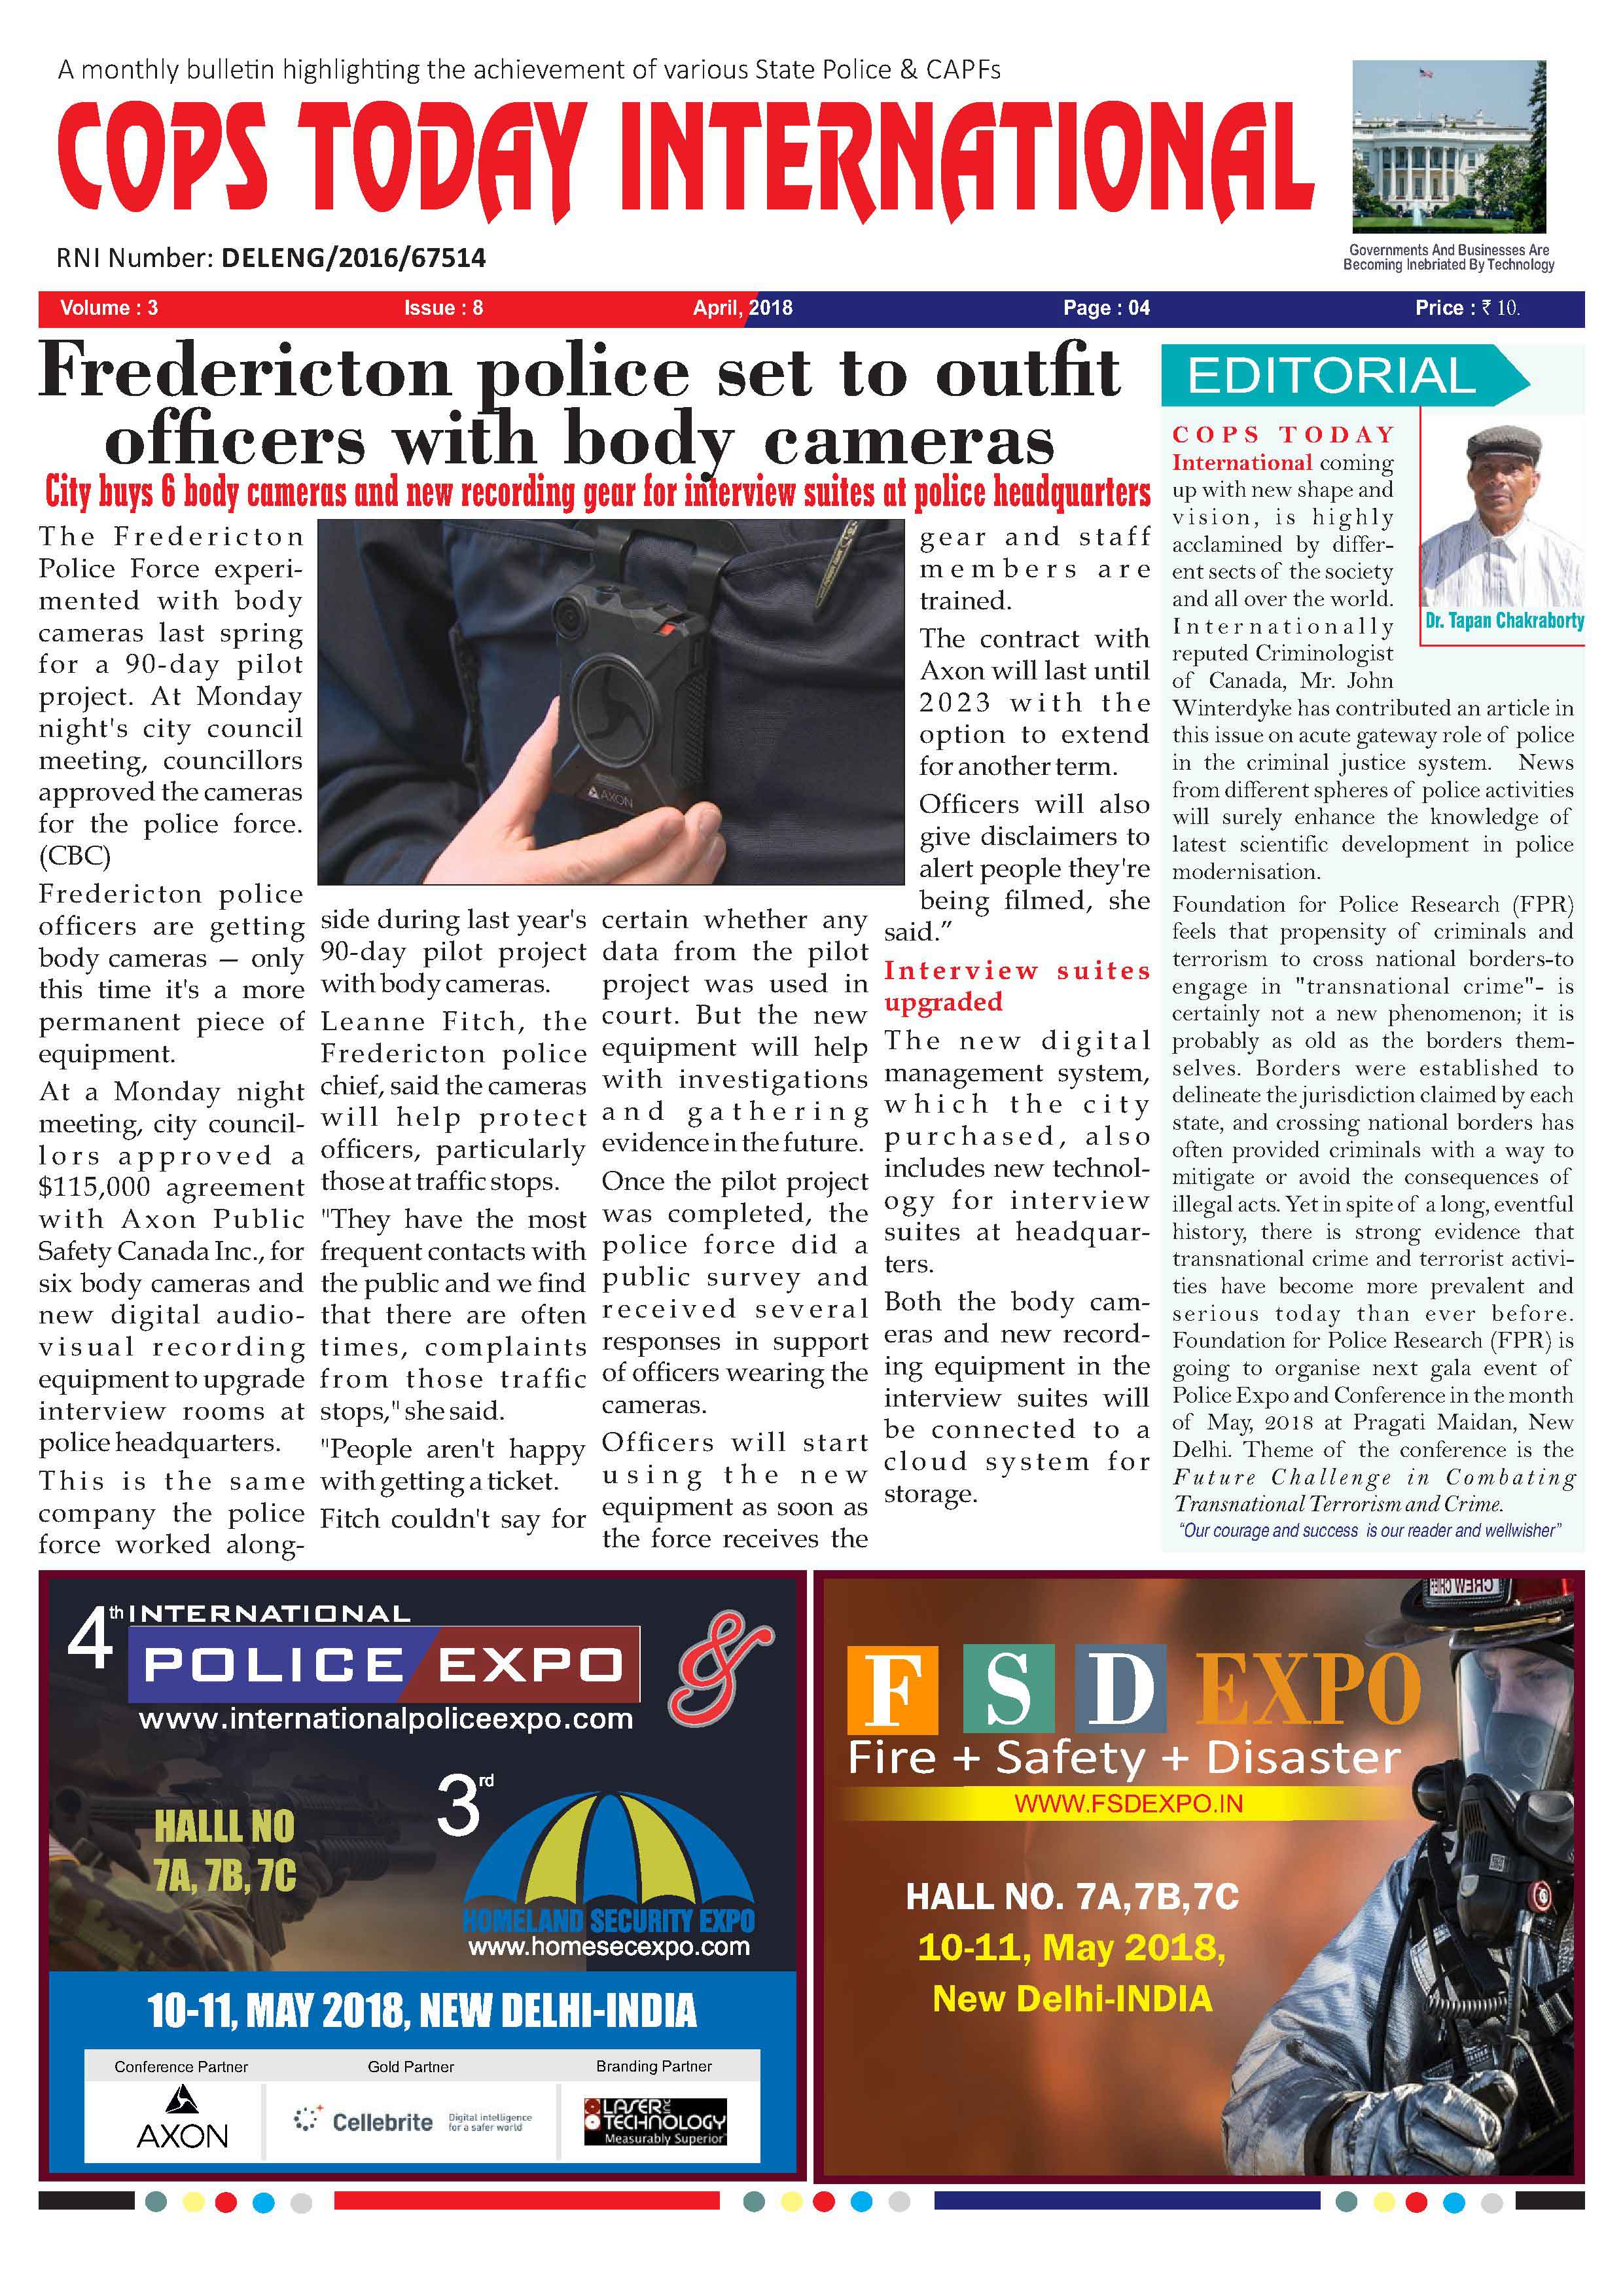 Cops Today News Paper of April 2018